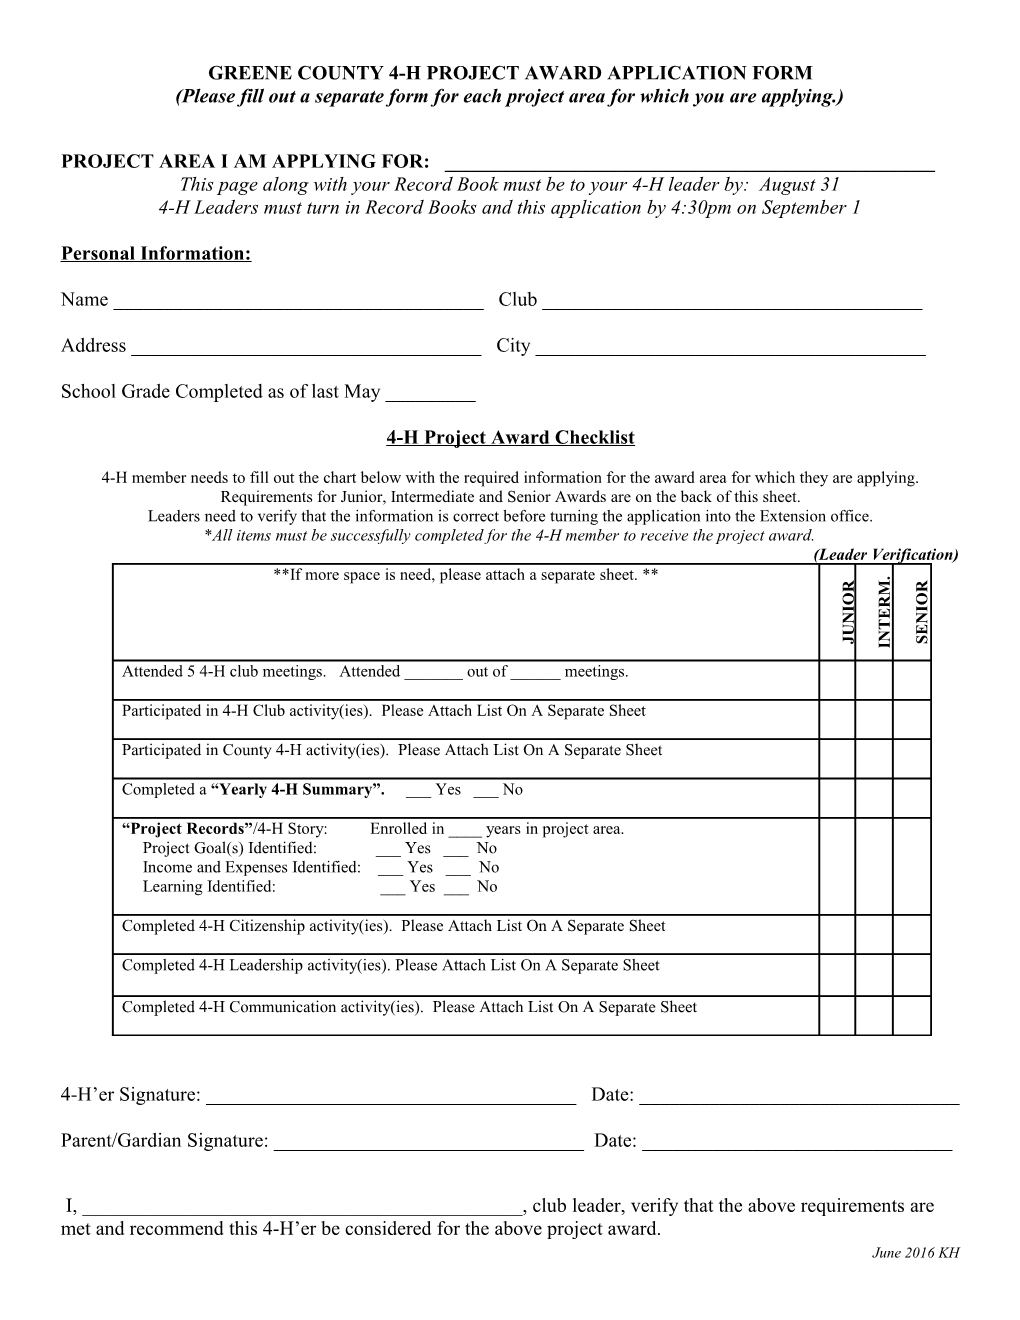 Calhoun County Project Award Application Form